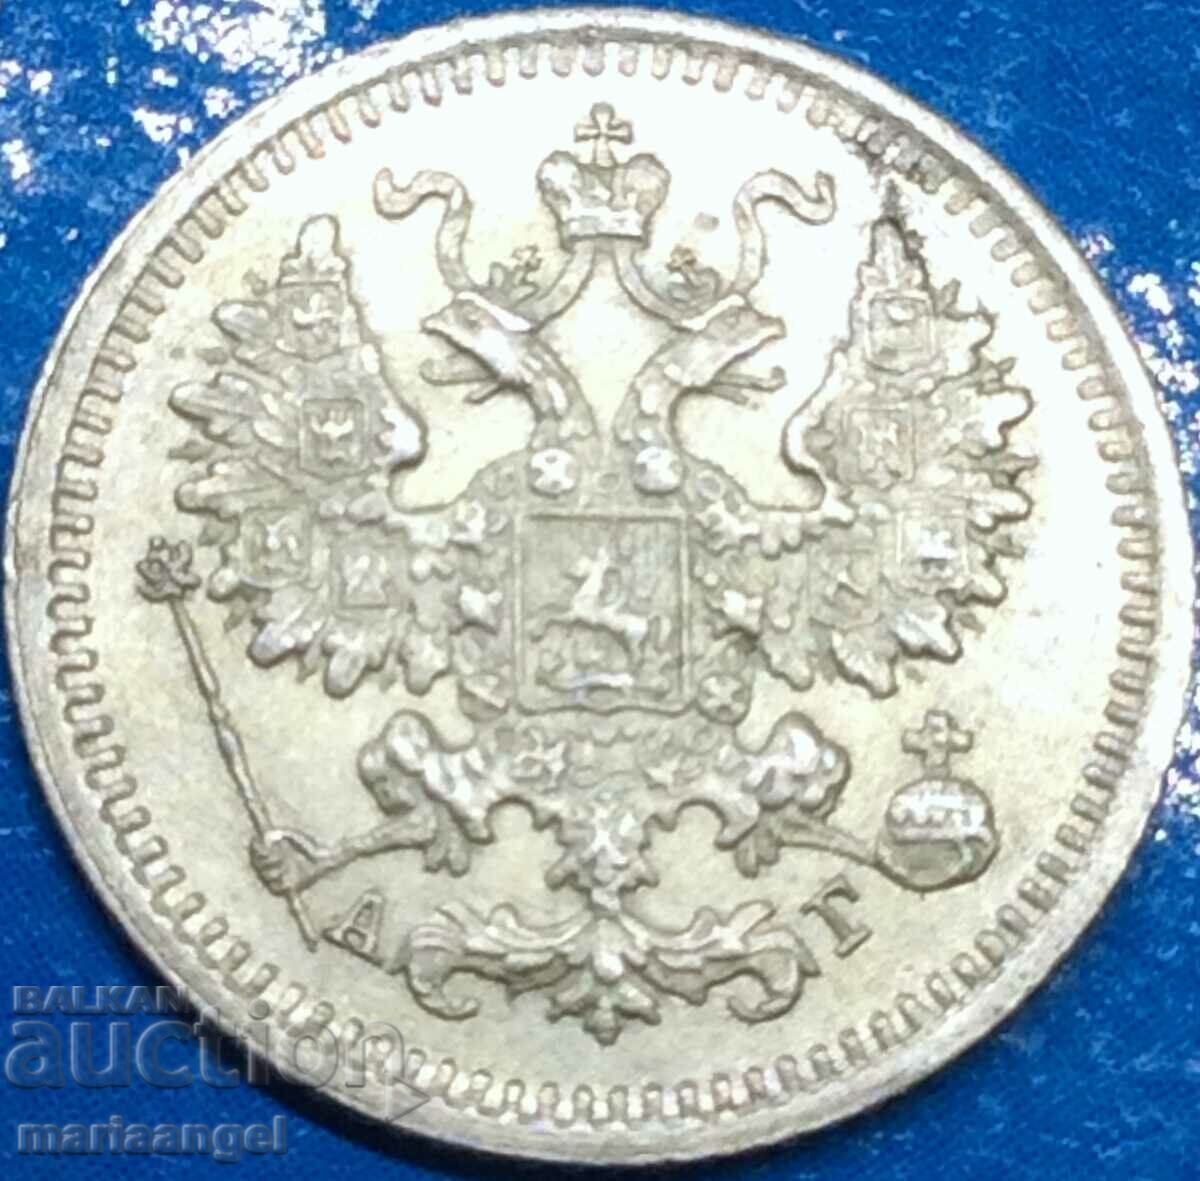 5 kopecks 1890 Russia Alexander III silver